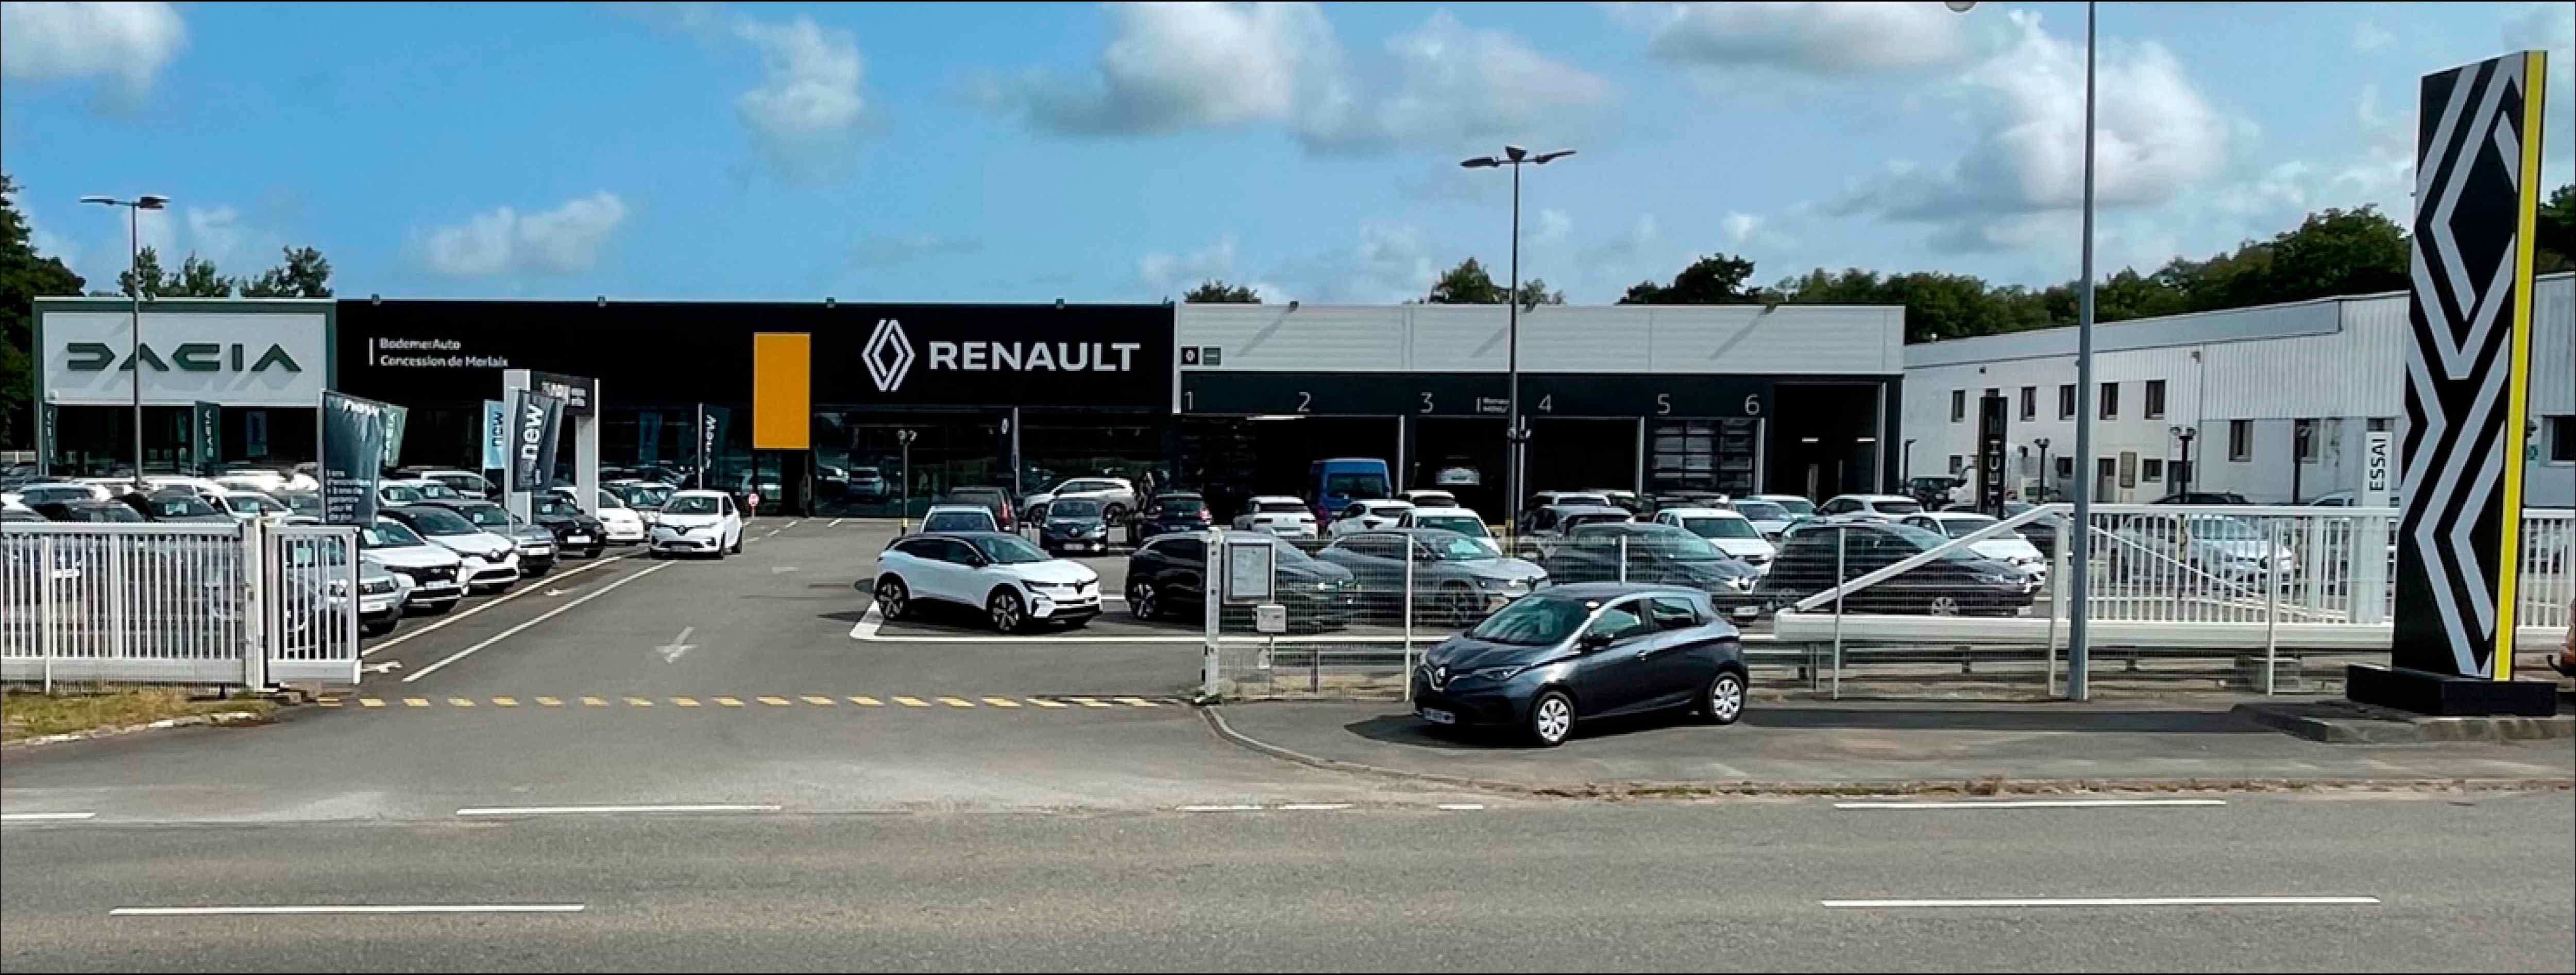 Recrutement: Opérateur Renault Minute (H/F) chez Groupe Bodemer à Lamballe-Armor